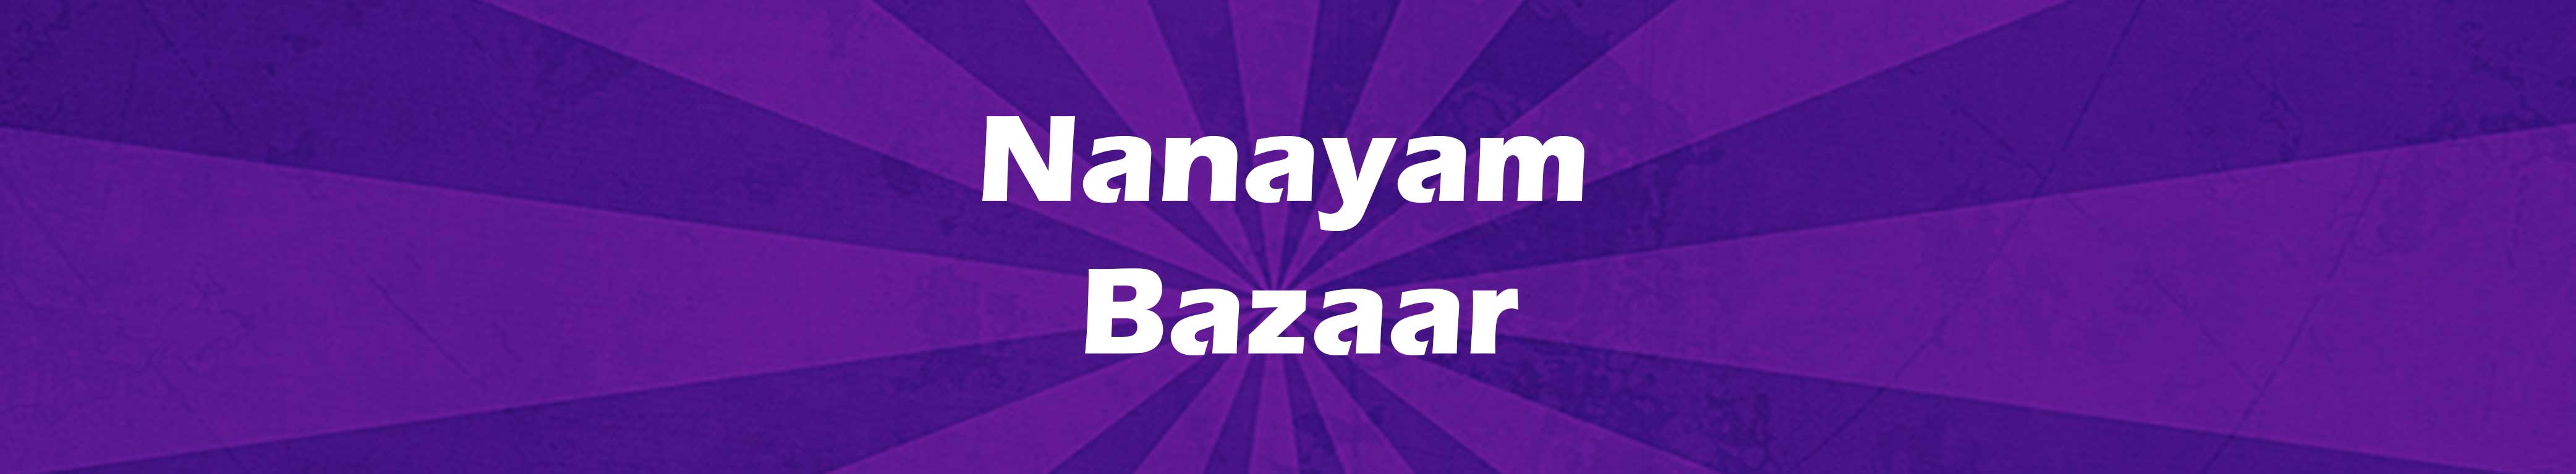 Nanayam Bazaar Banner Image